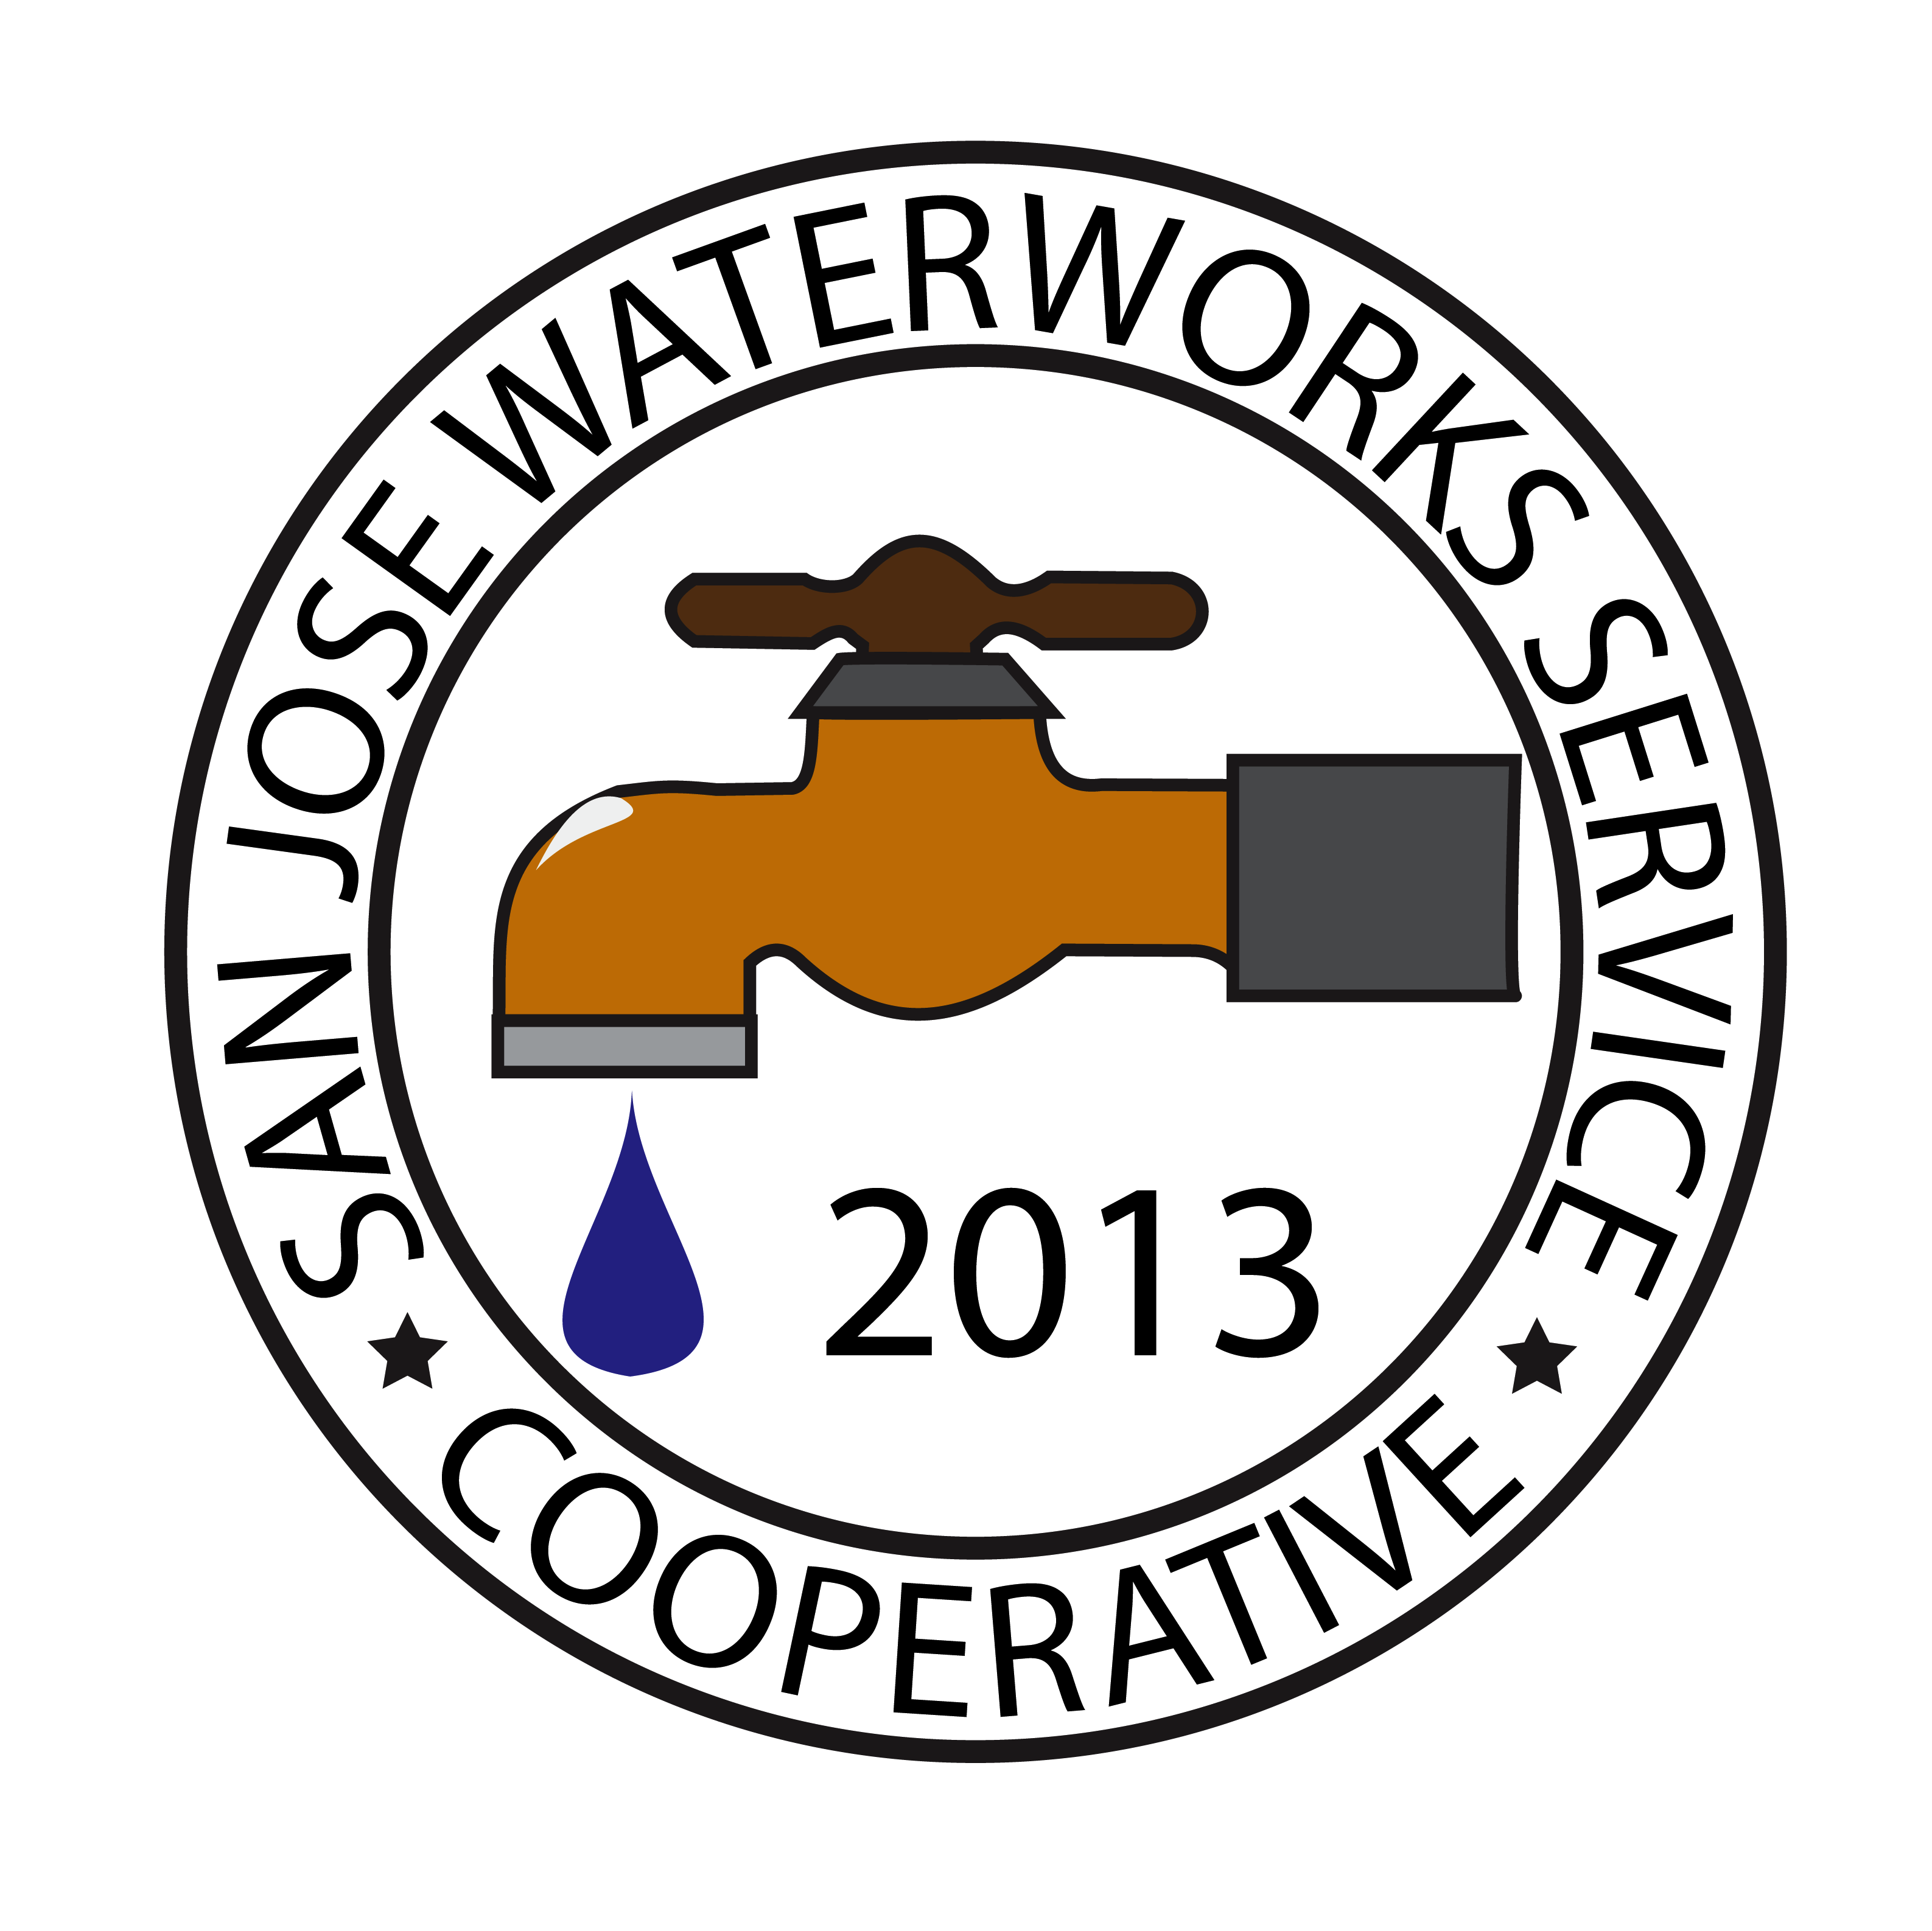 SAN JOSE WATERWORKS SERVICE COOPERATIVE